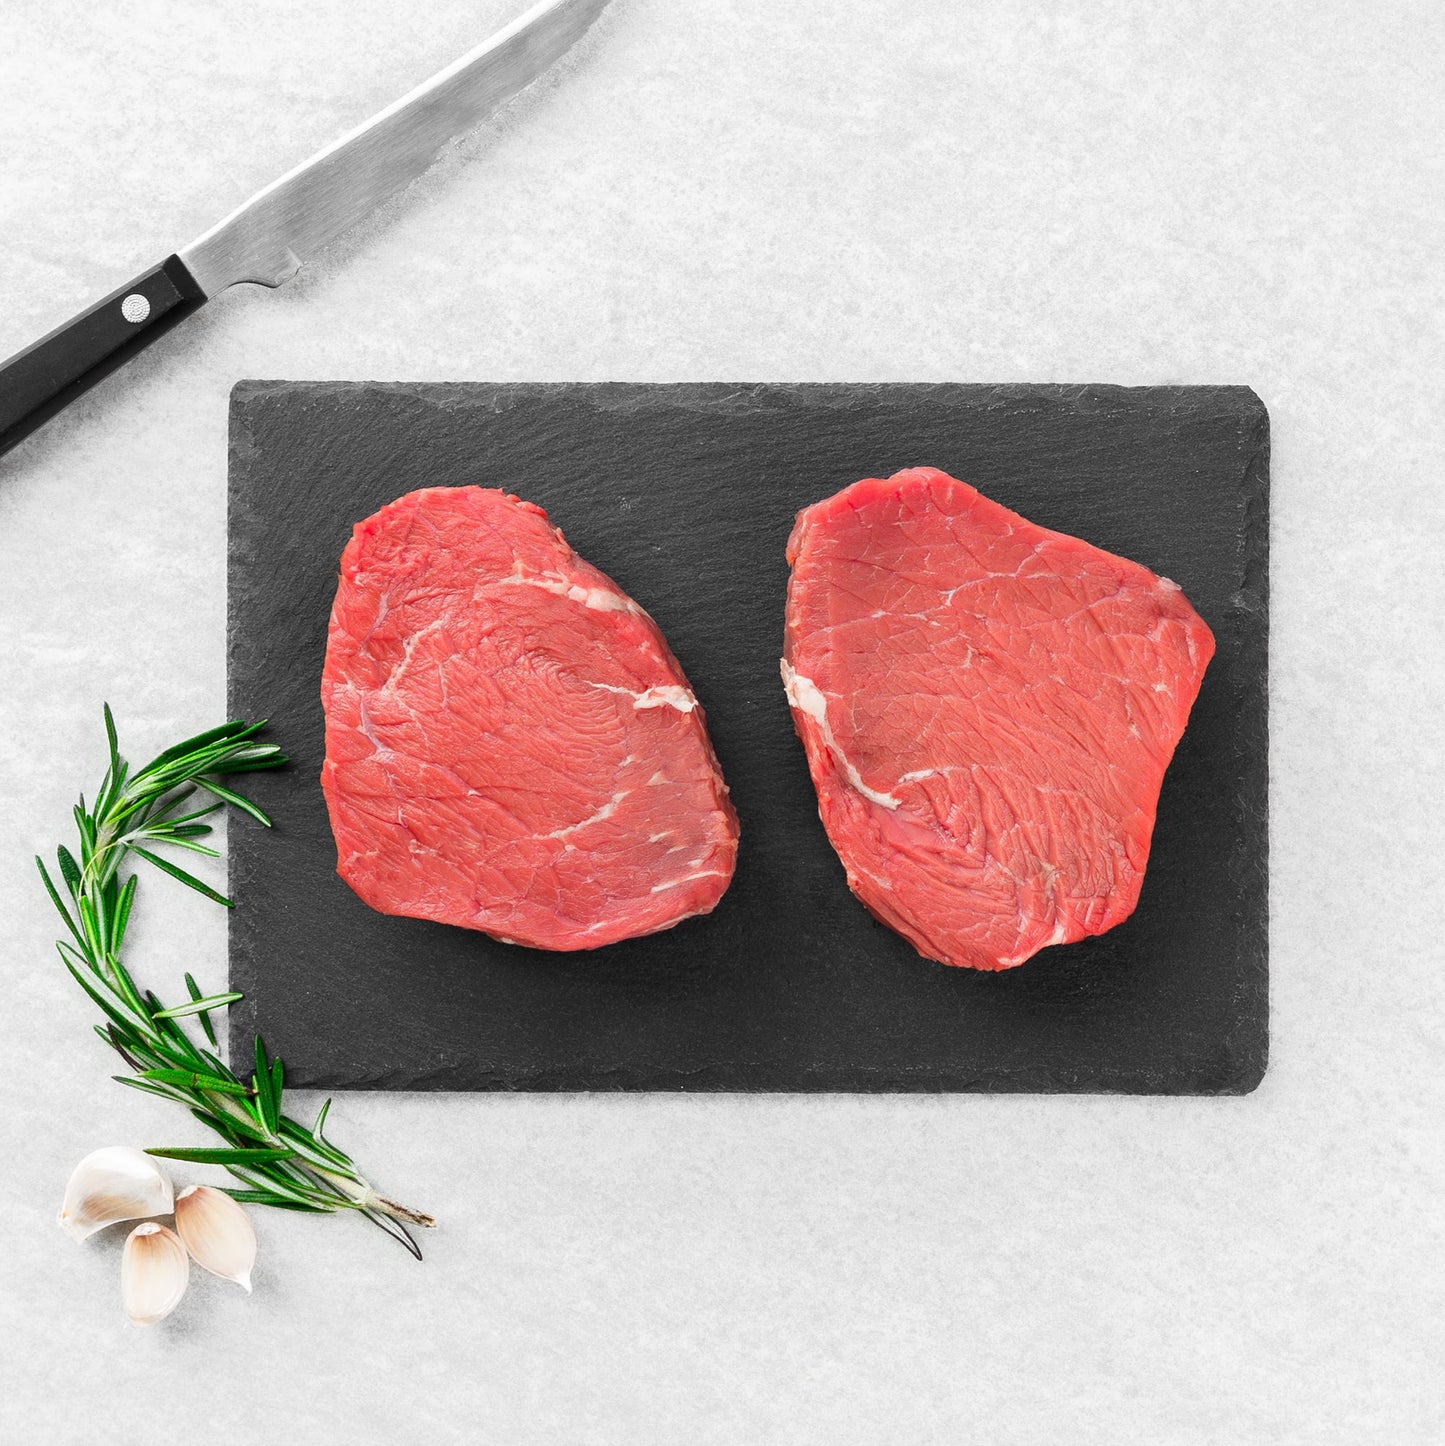 USDA Choice Sirloin Steak - (4) 6 oz. steaks